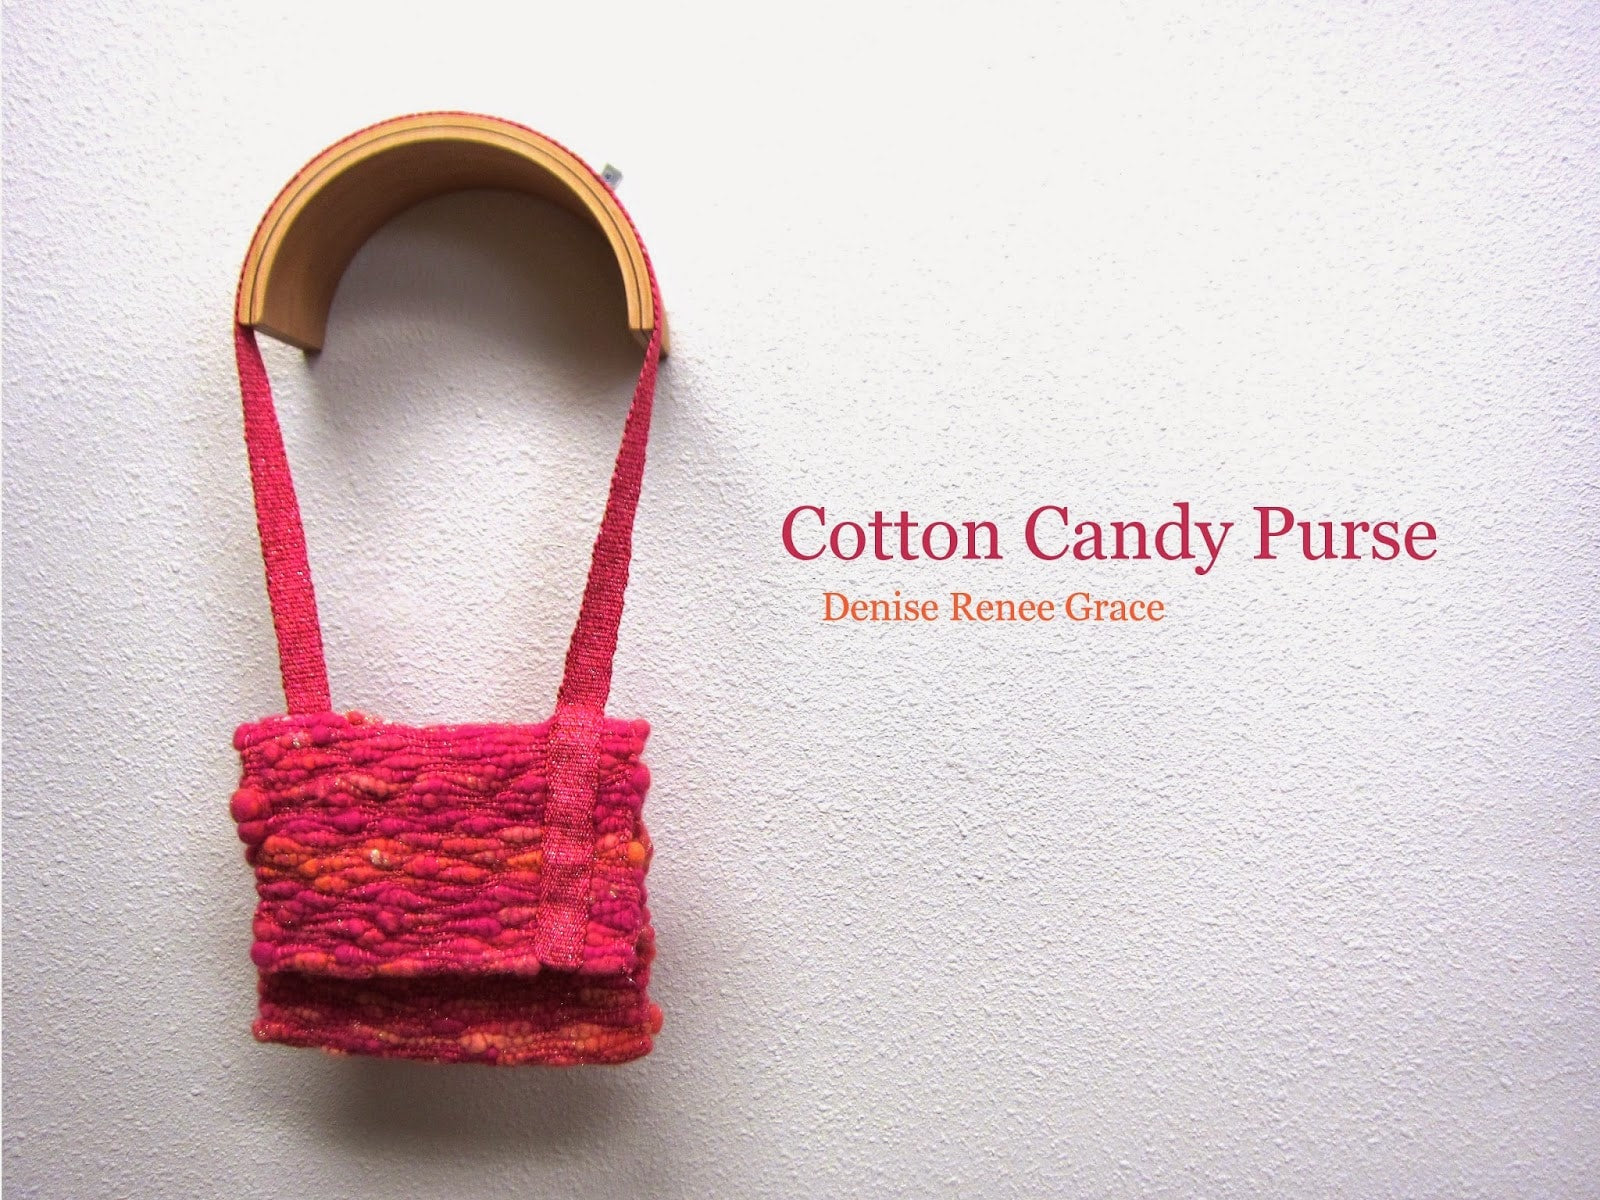 Cotton Candy Purse